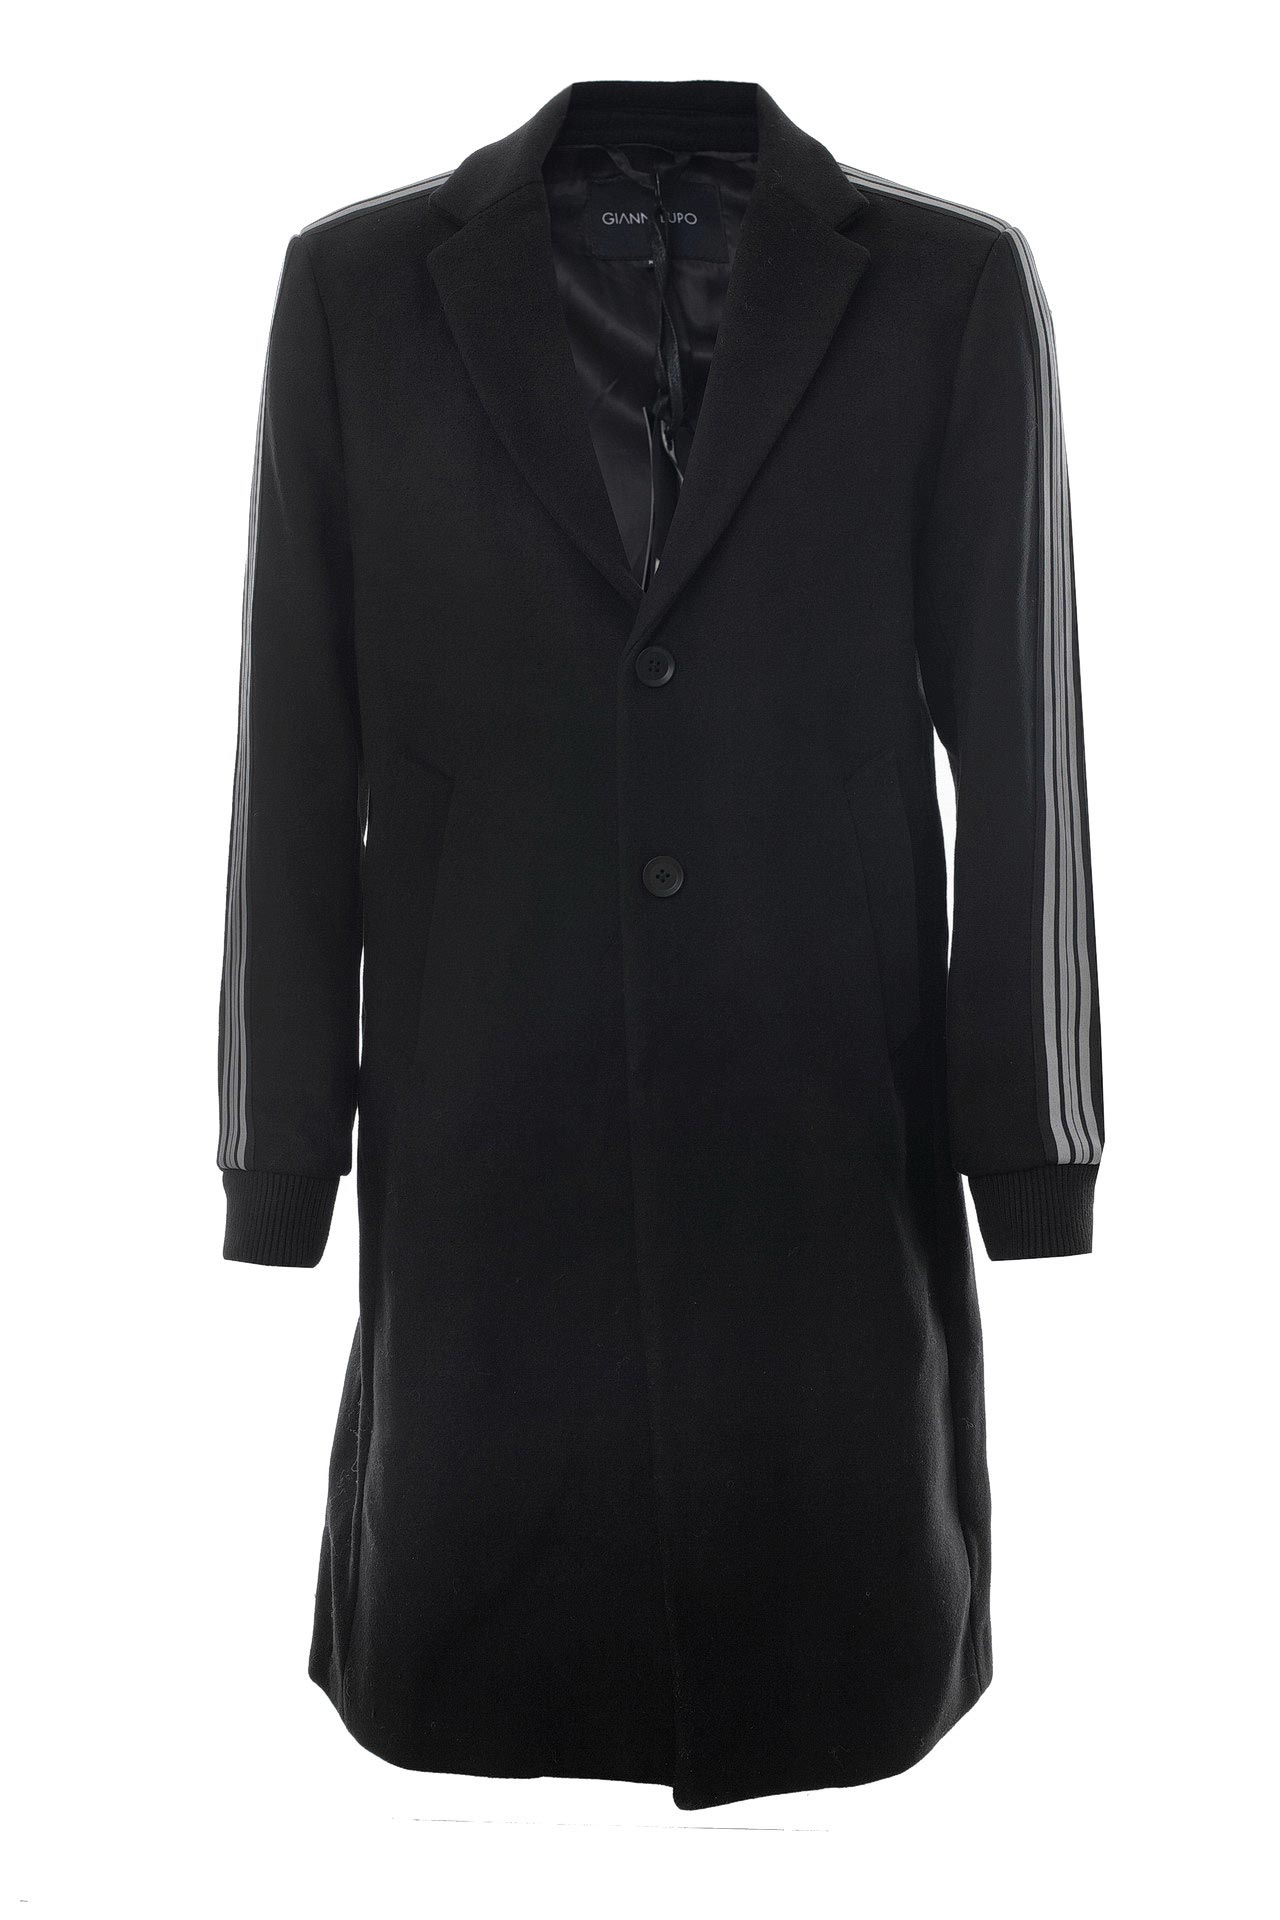 Одежда мужская Пальто GIANNI LUPO (GL9188-18/18.1). Купить за 11500 руб.